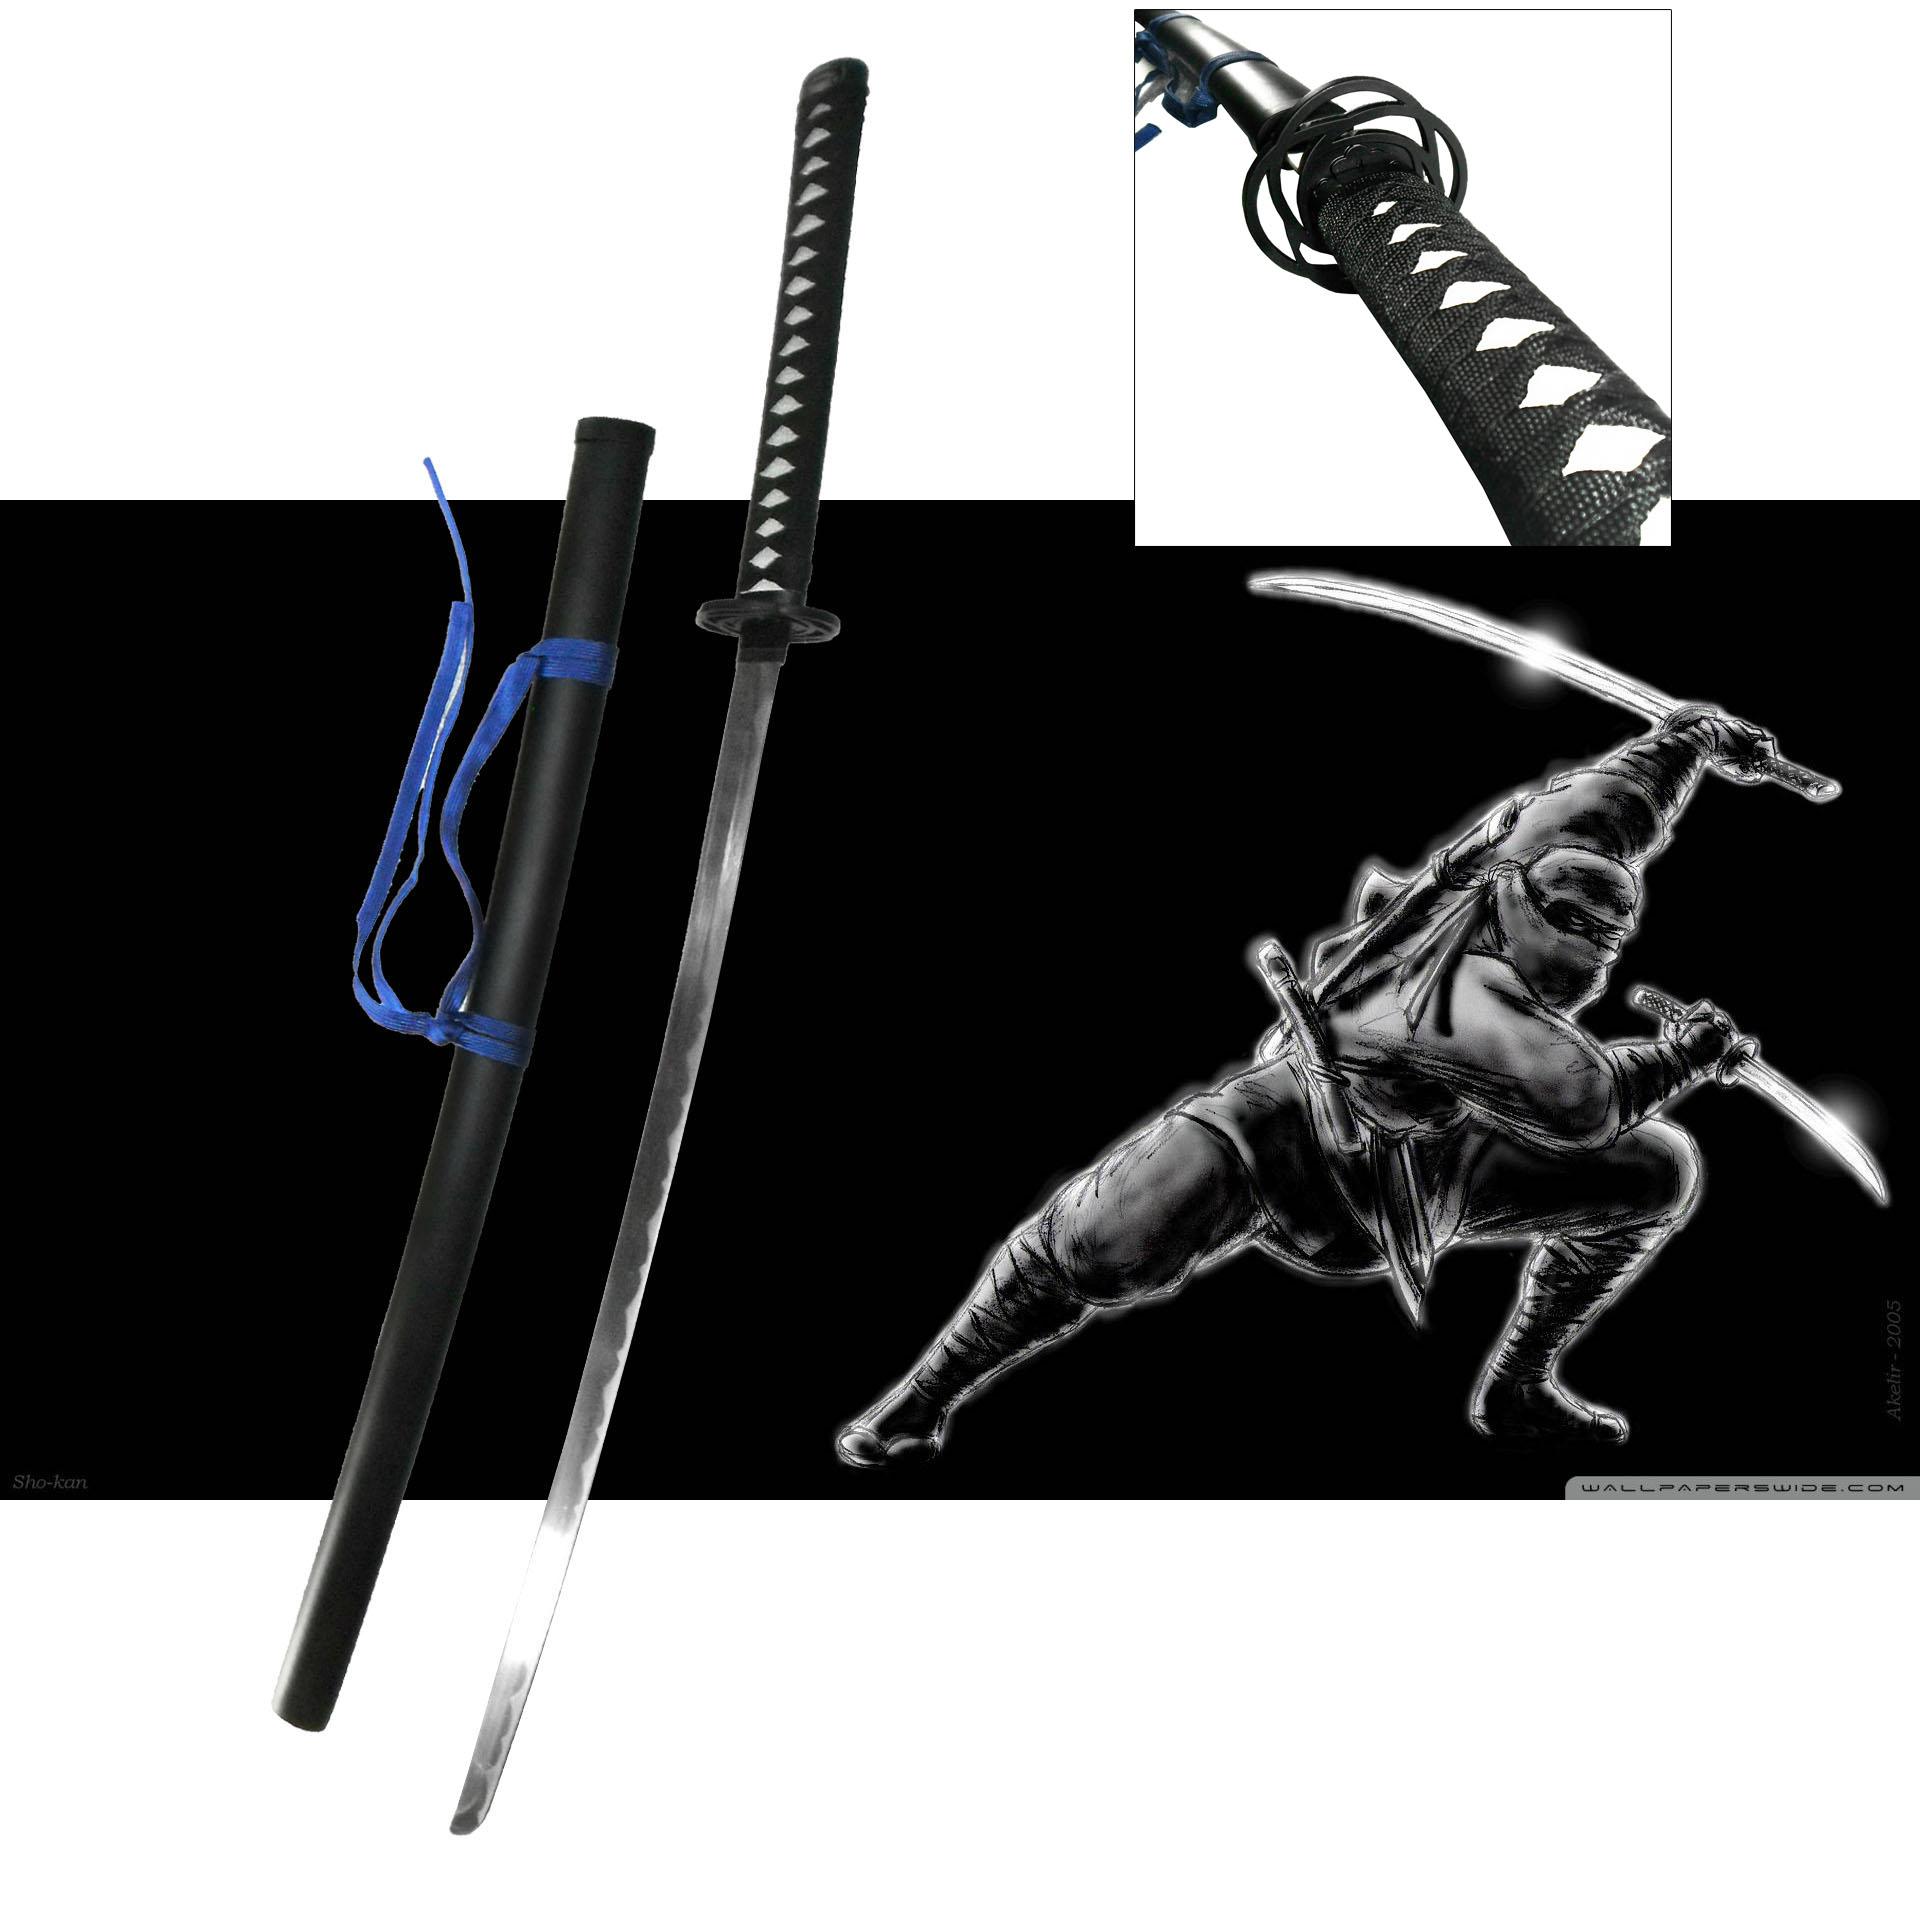 JAPAN ดาบซามูไร Touken Ranbu โทเคน รันบุ ป่วยดาบ Yamatonokami Yasusada ยามาโตะโนะคามิ ยาสุซาดะ คาตานะ サムライ Katana Dragon Samurai Sword ดาบนินจา มีดดาบ ดาบญี่ปุ่น Ninja